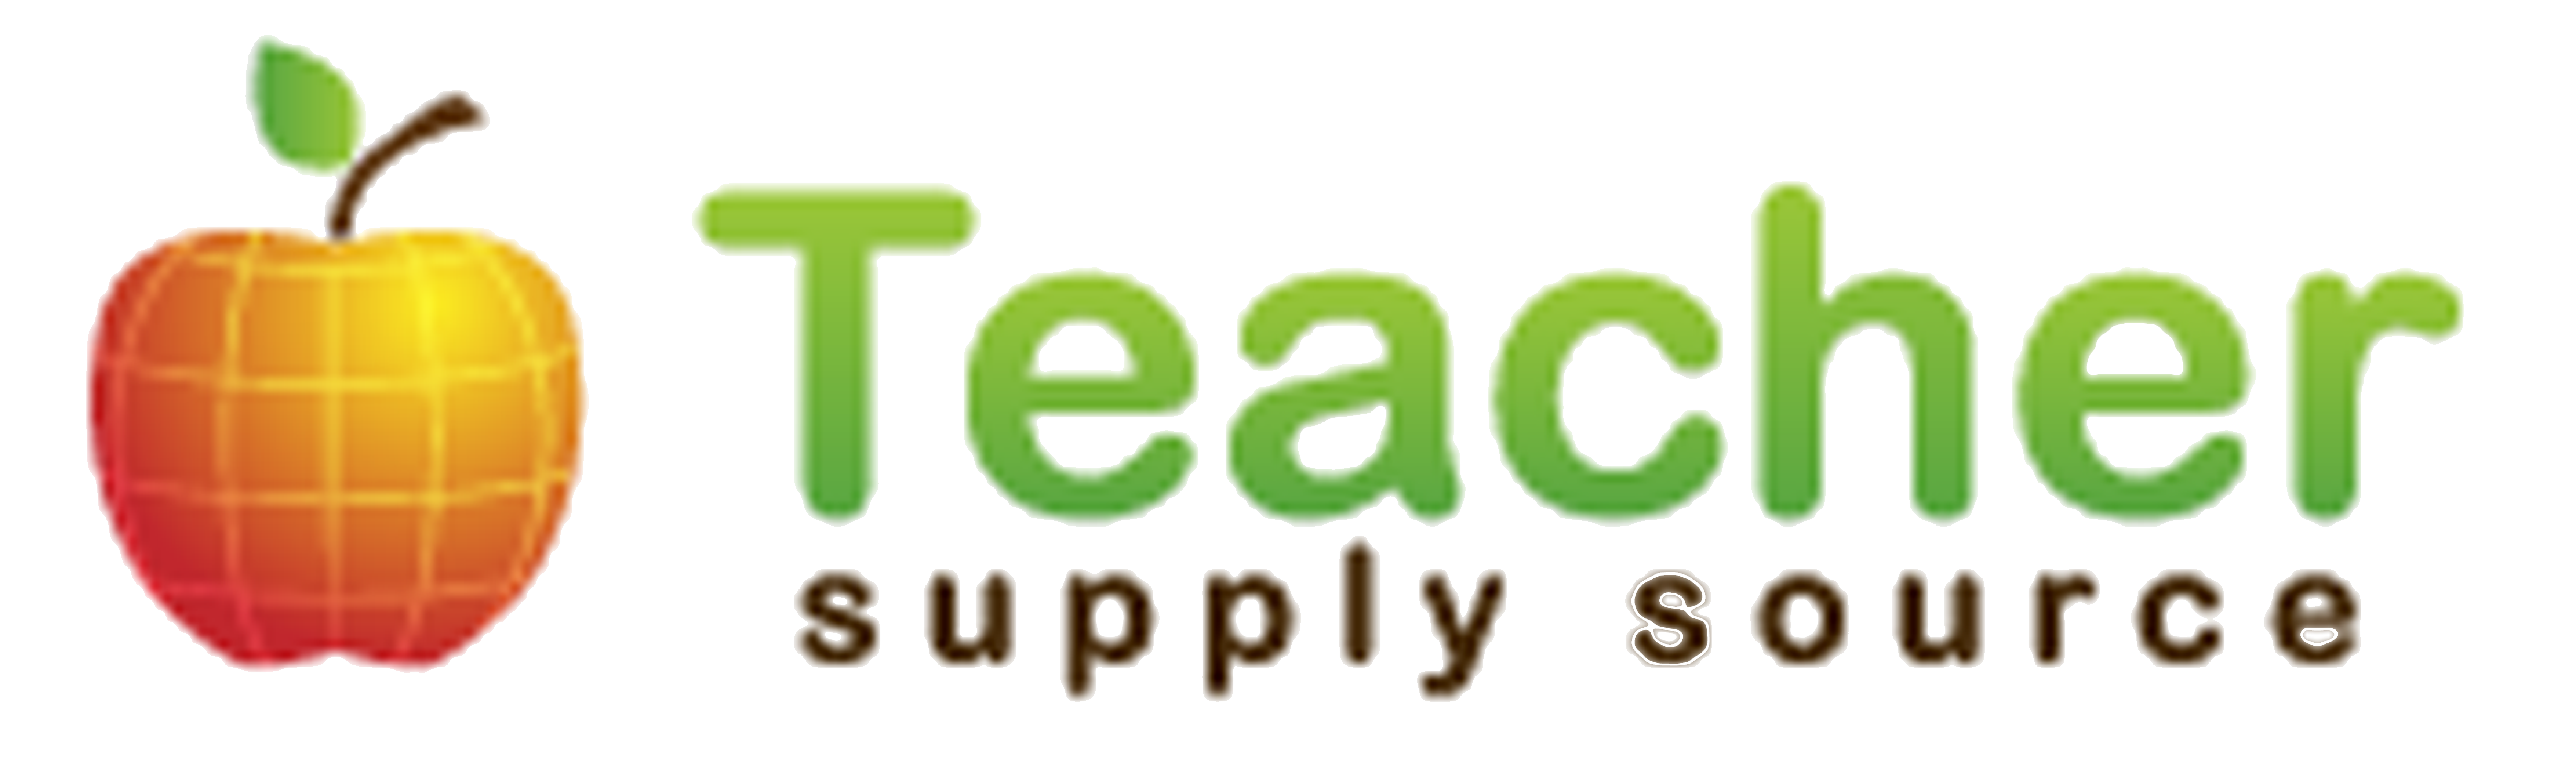 teacher_supply